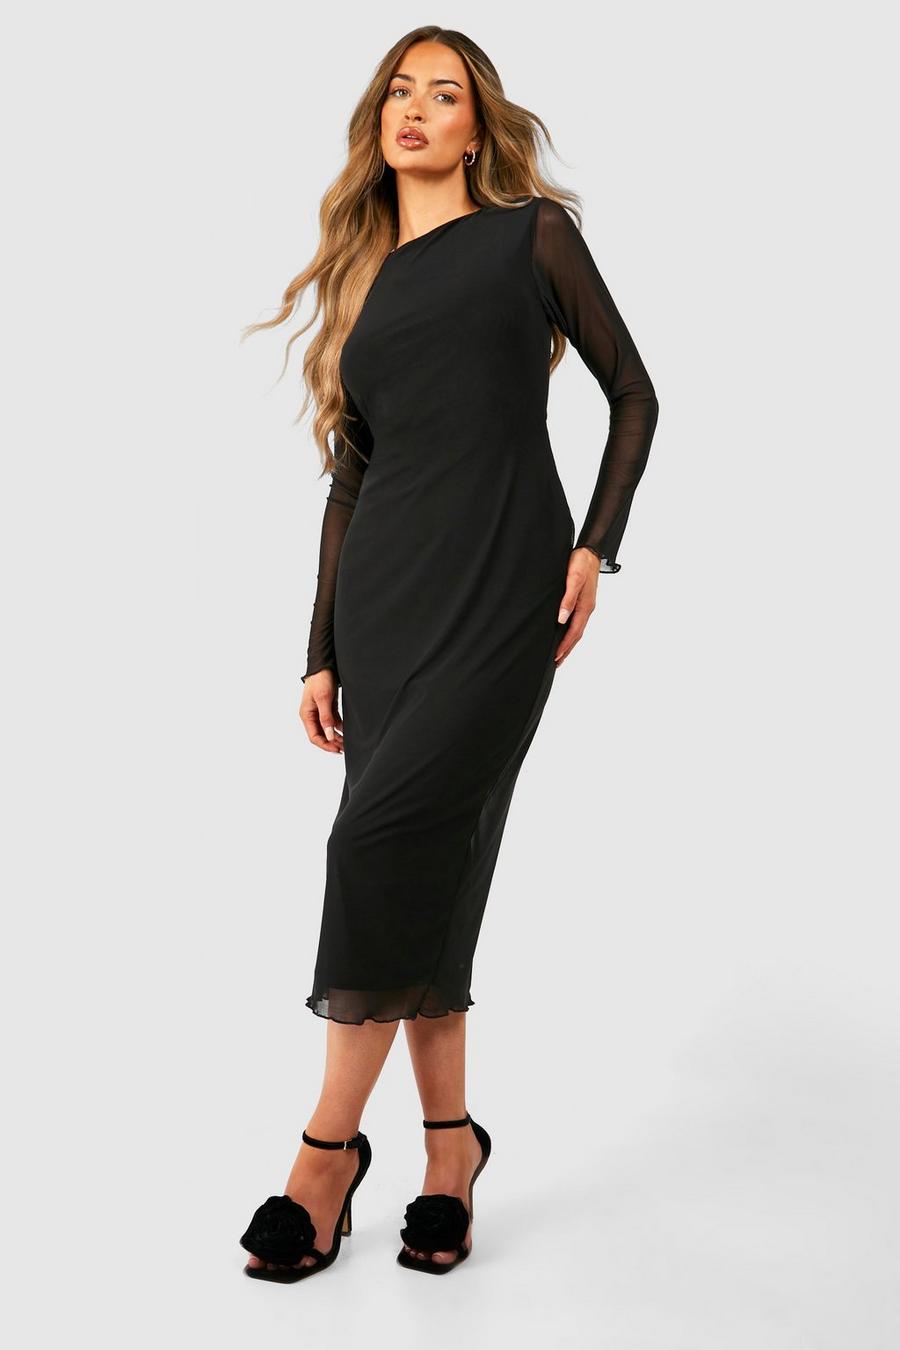 Black Long Sleeve Dresses